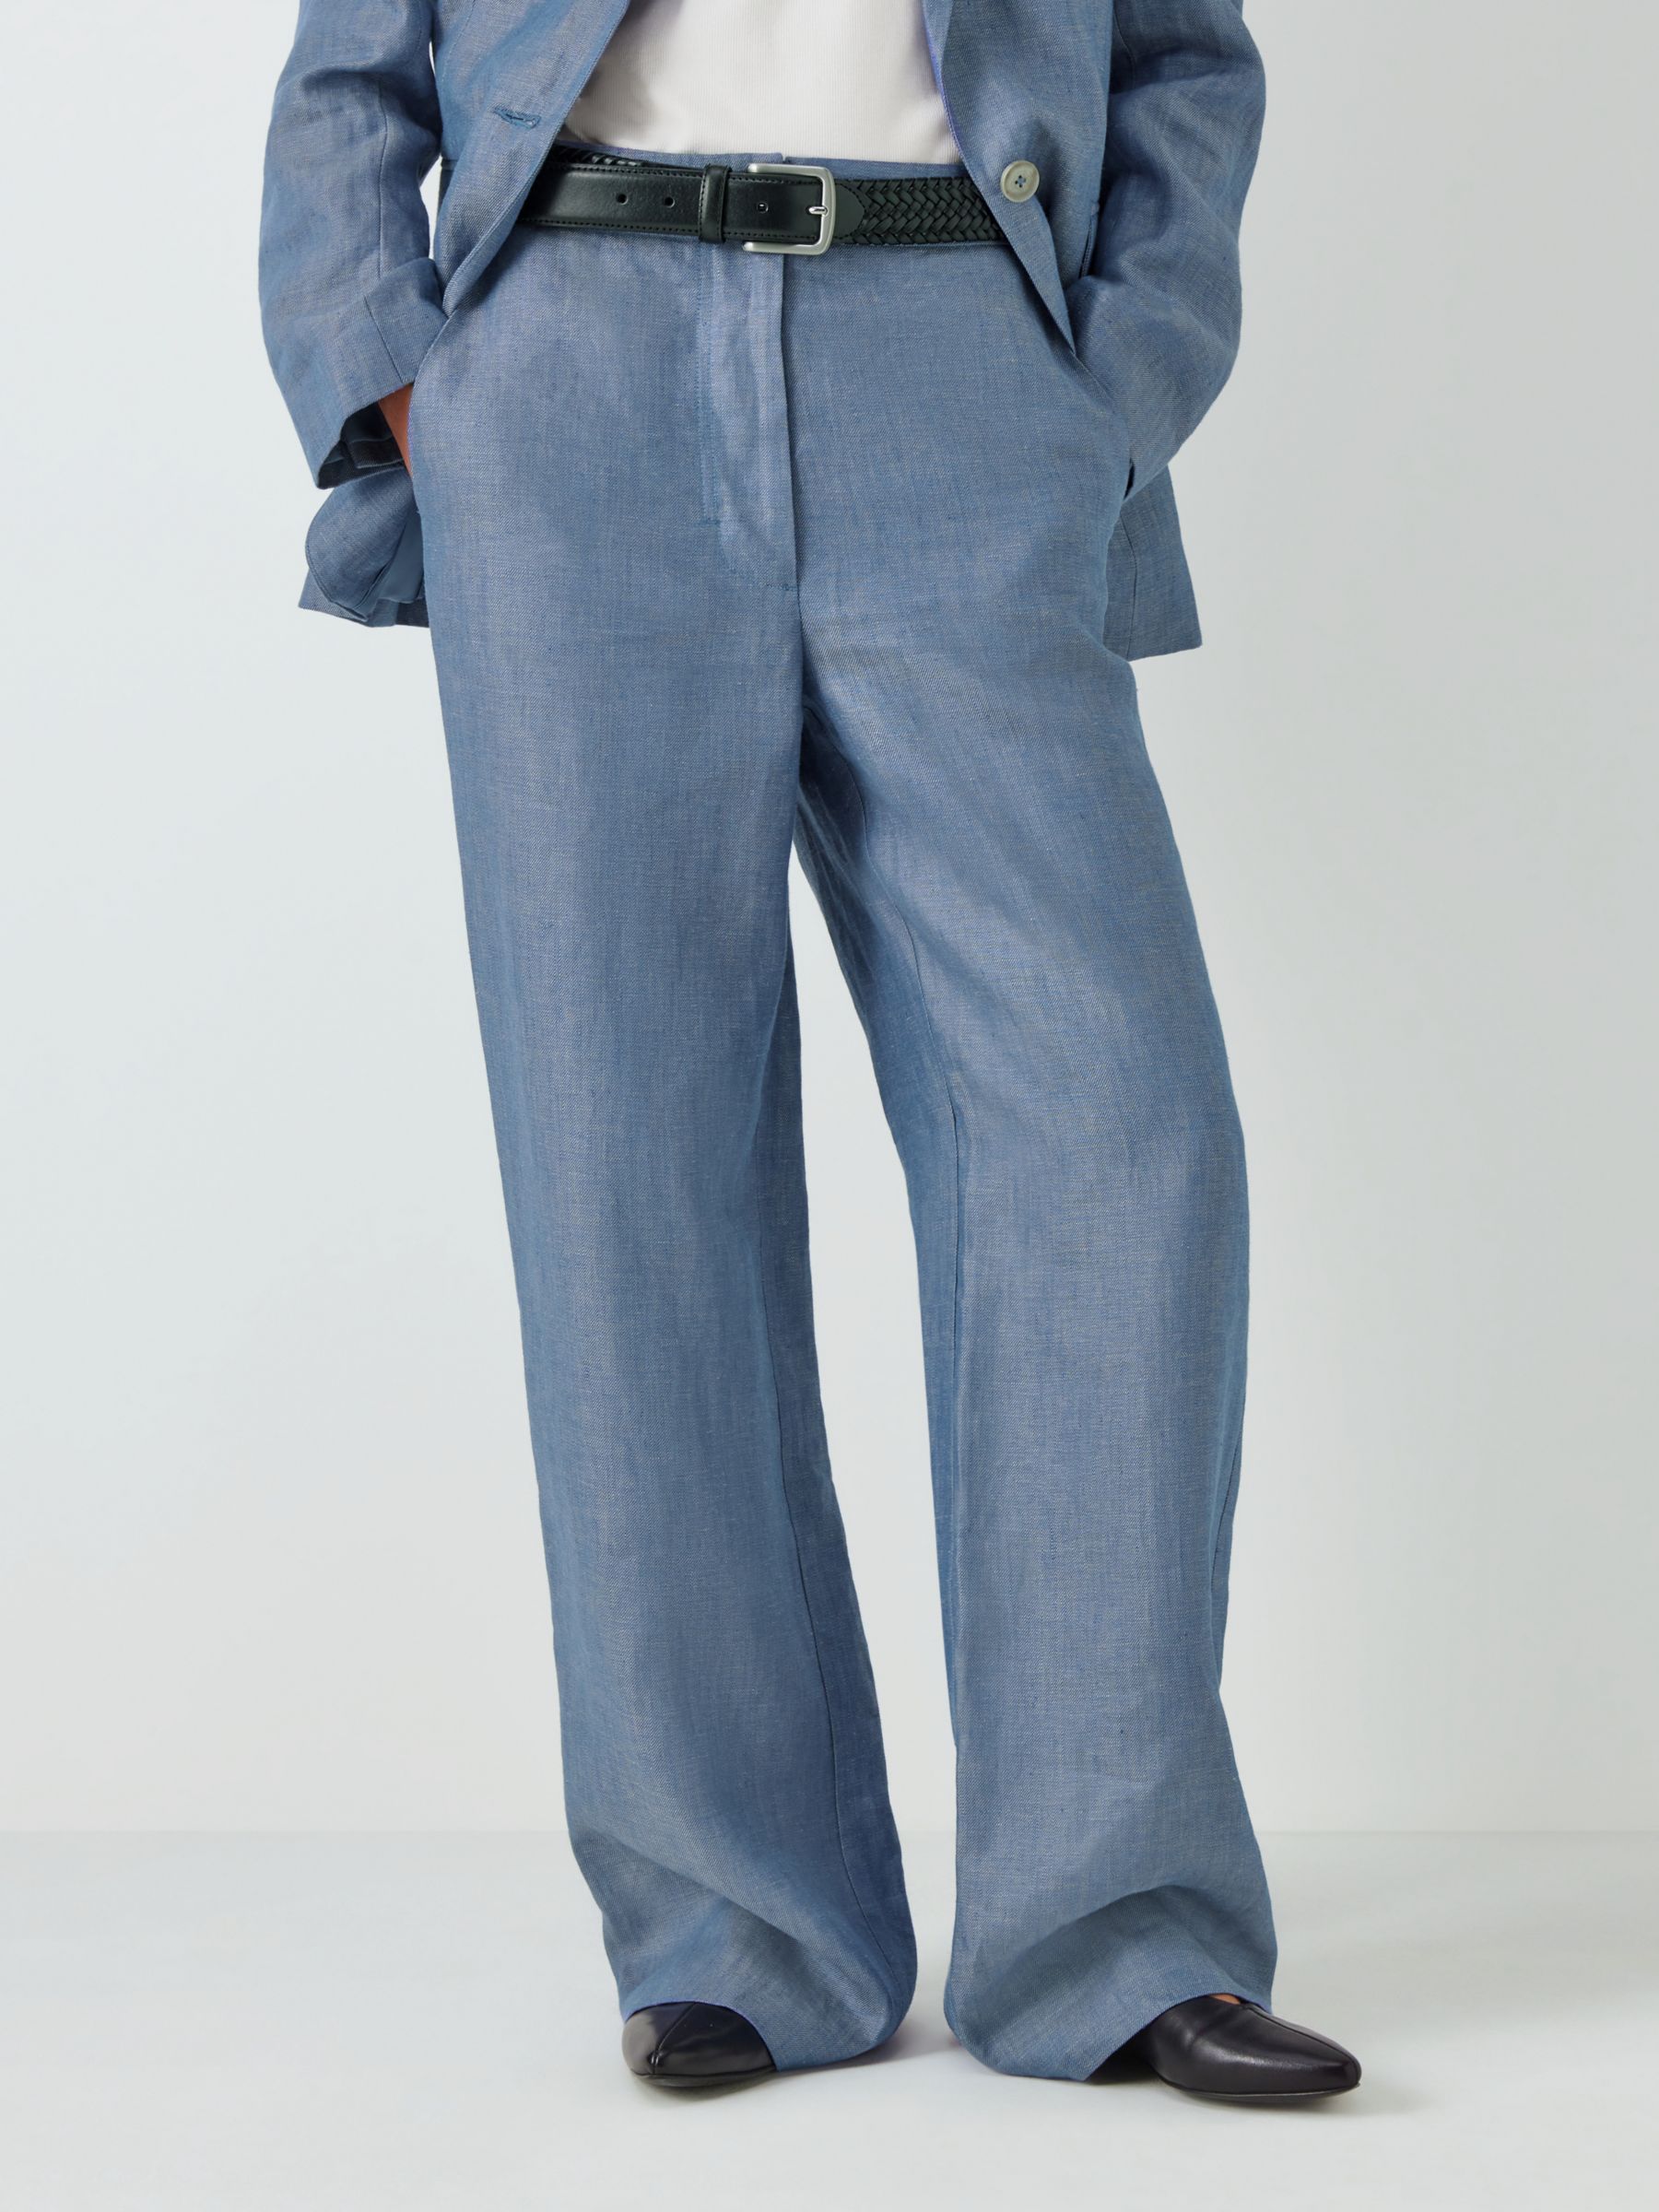 Women's linen pants large sizes summer 7/8 harem pants plain casual pants  with elastic loose cotton linen pants beach pants summer pants light  comfortable breathable (Color : Gray, Size : X-Large) price